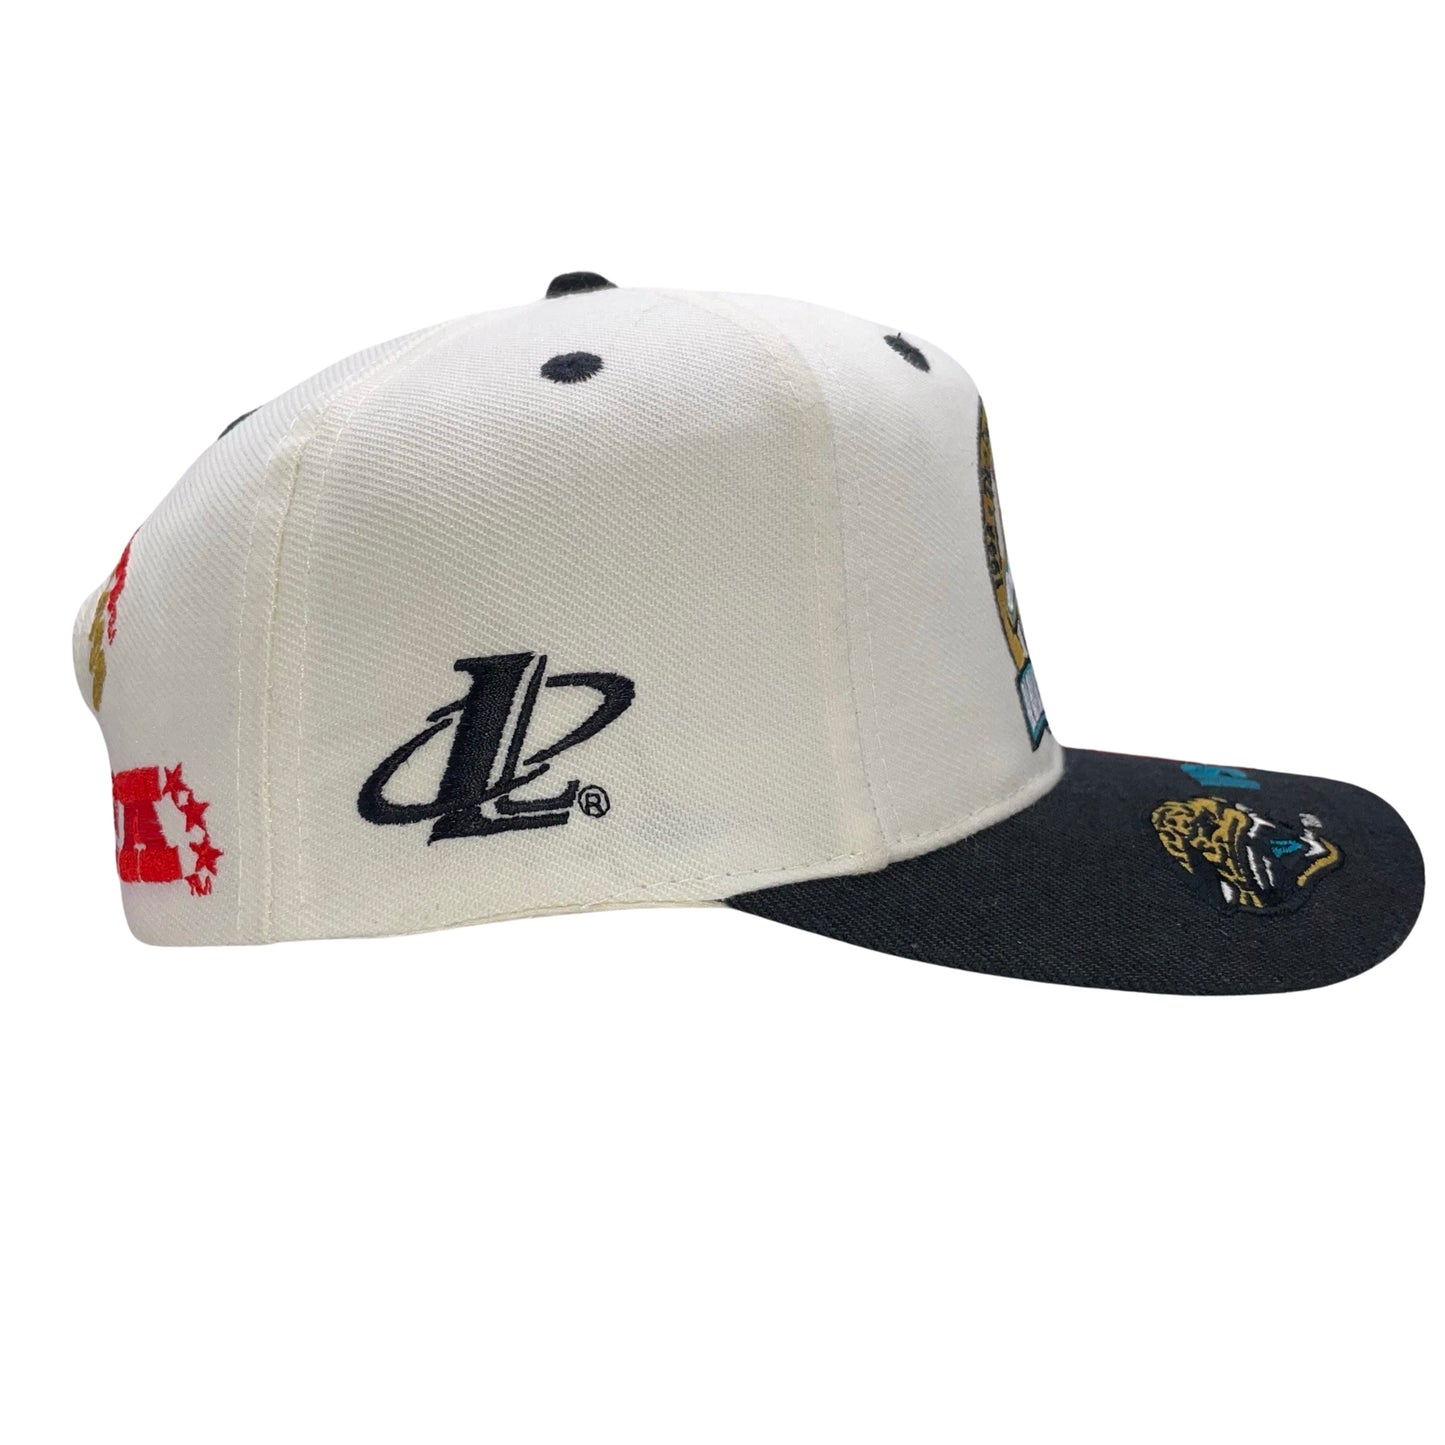 Vintage Jacksonville Jaguars LOGO ATHLETIC Inaugural Game hat